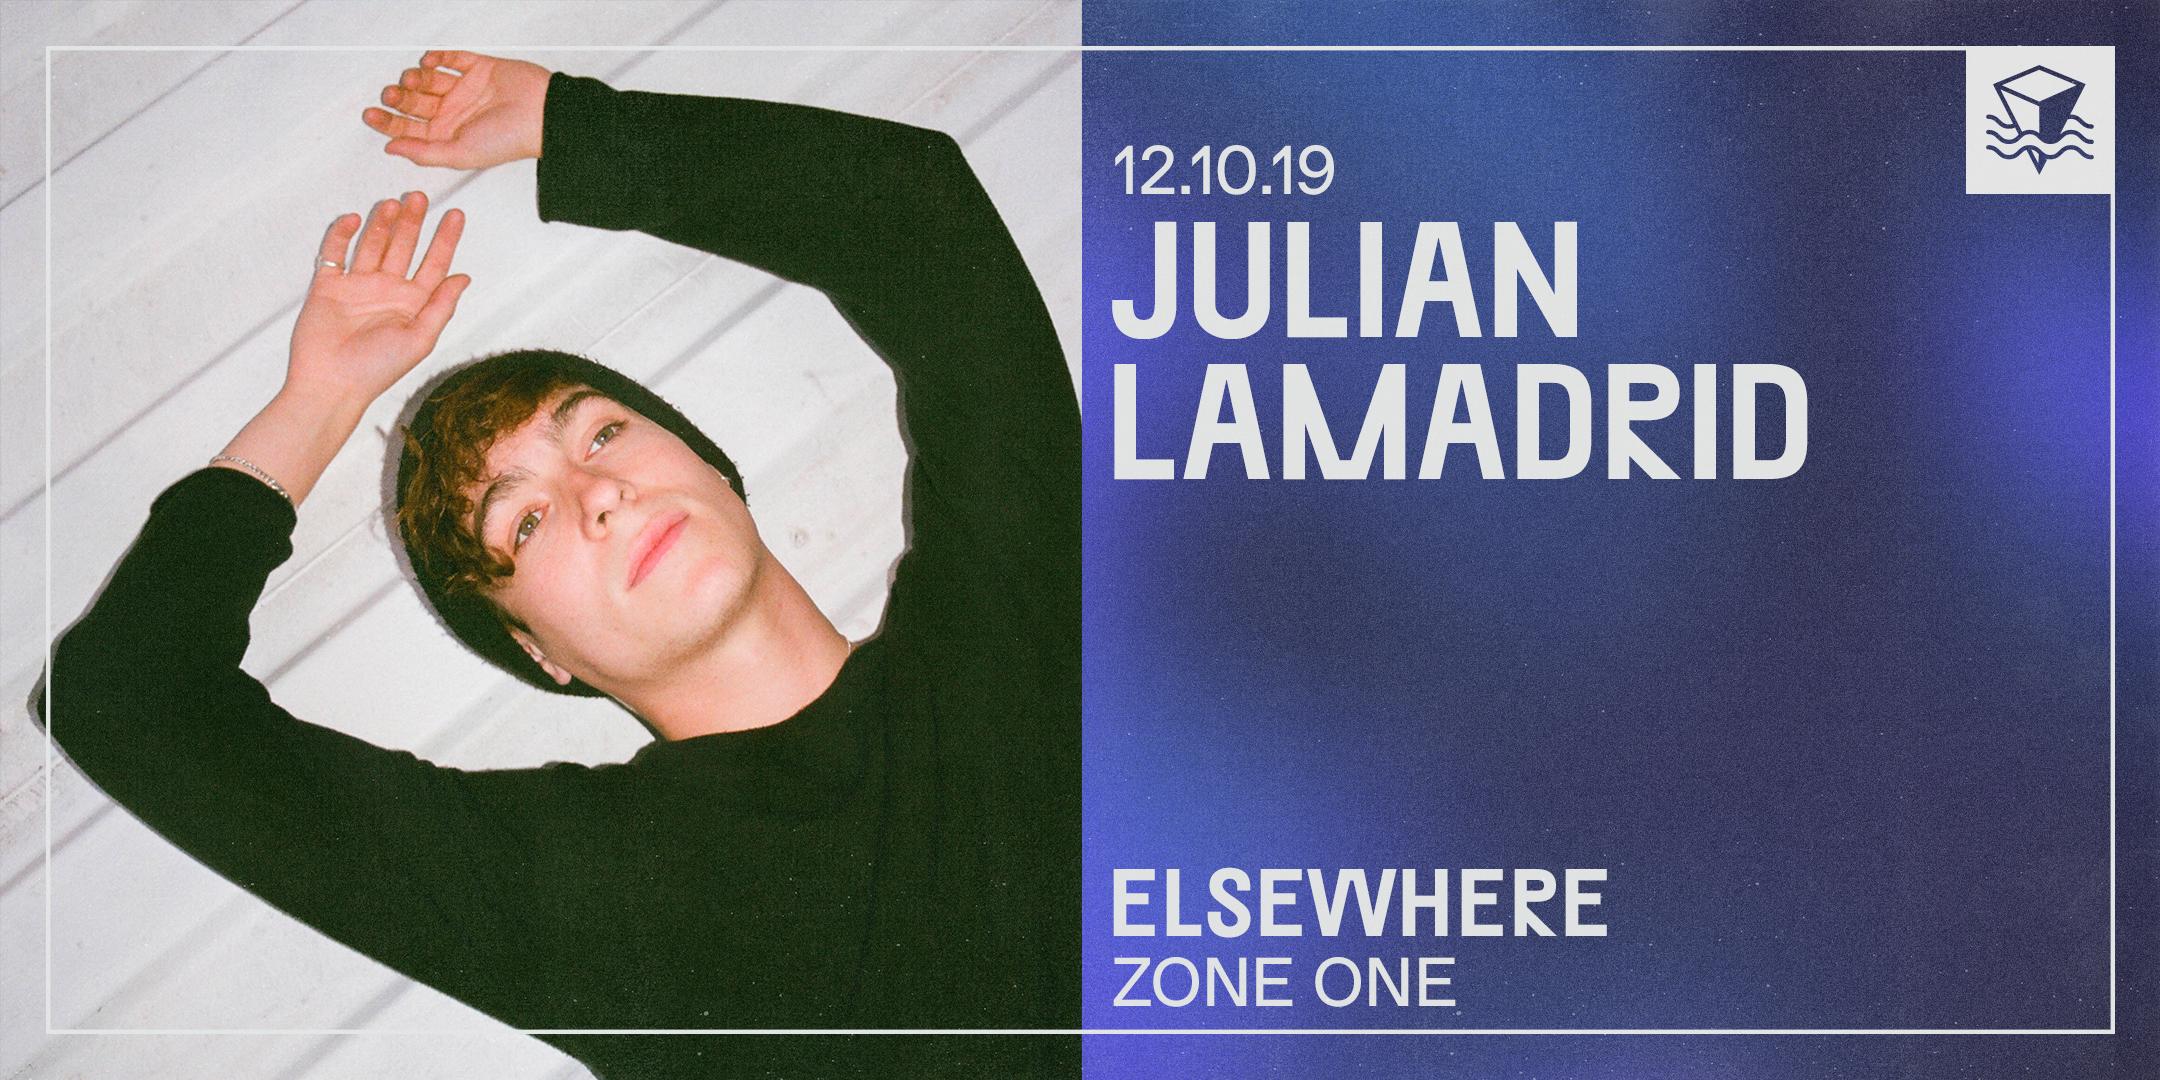 Julian Lamadrid @ Elsewhere (Zone One)